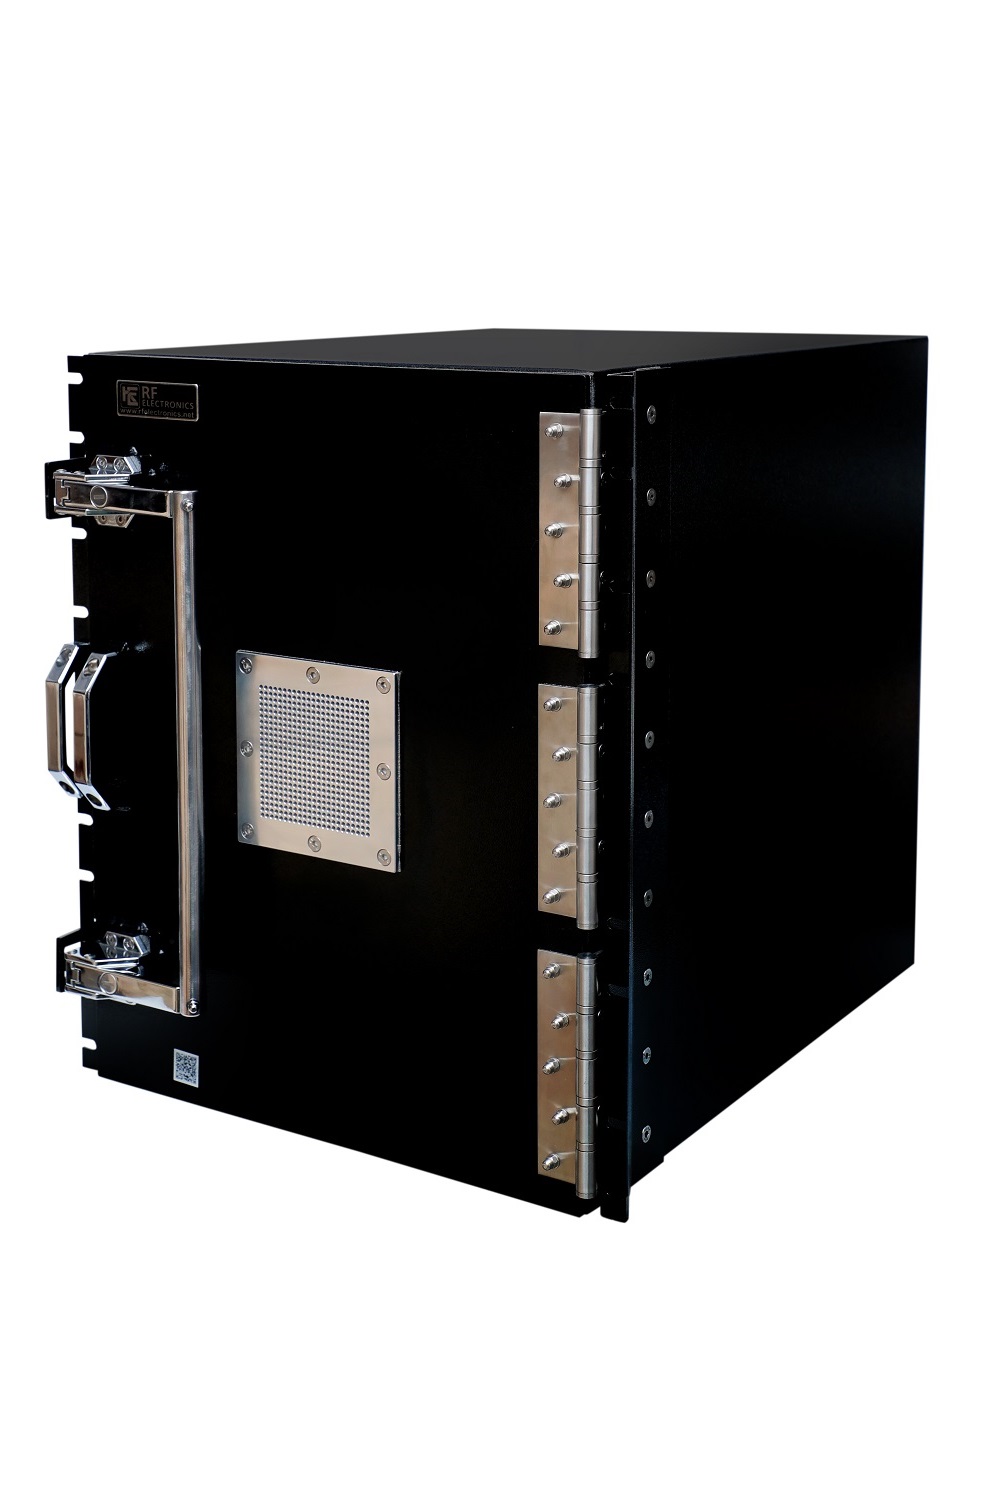 HDRF-2260-H RF Shield Test Box